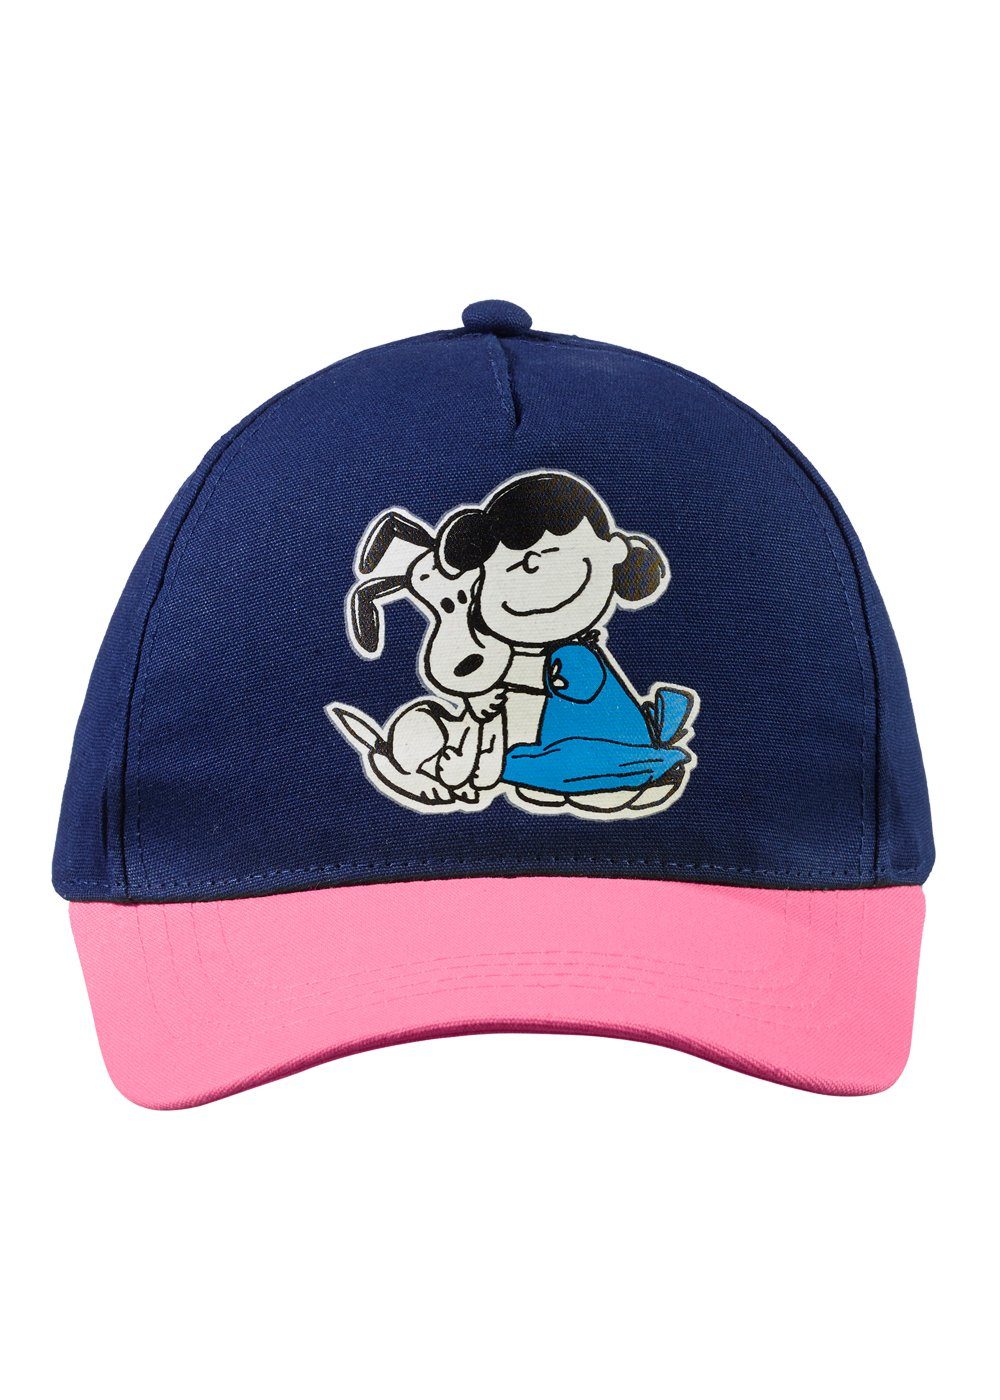 ONOMATO! Baseball Cap Peanuts - Snoopy und Lucy van Pelt Mädchen Kappe | Baseball Caps